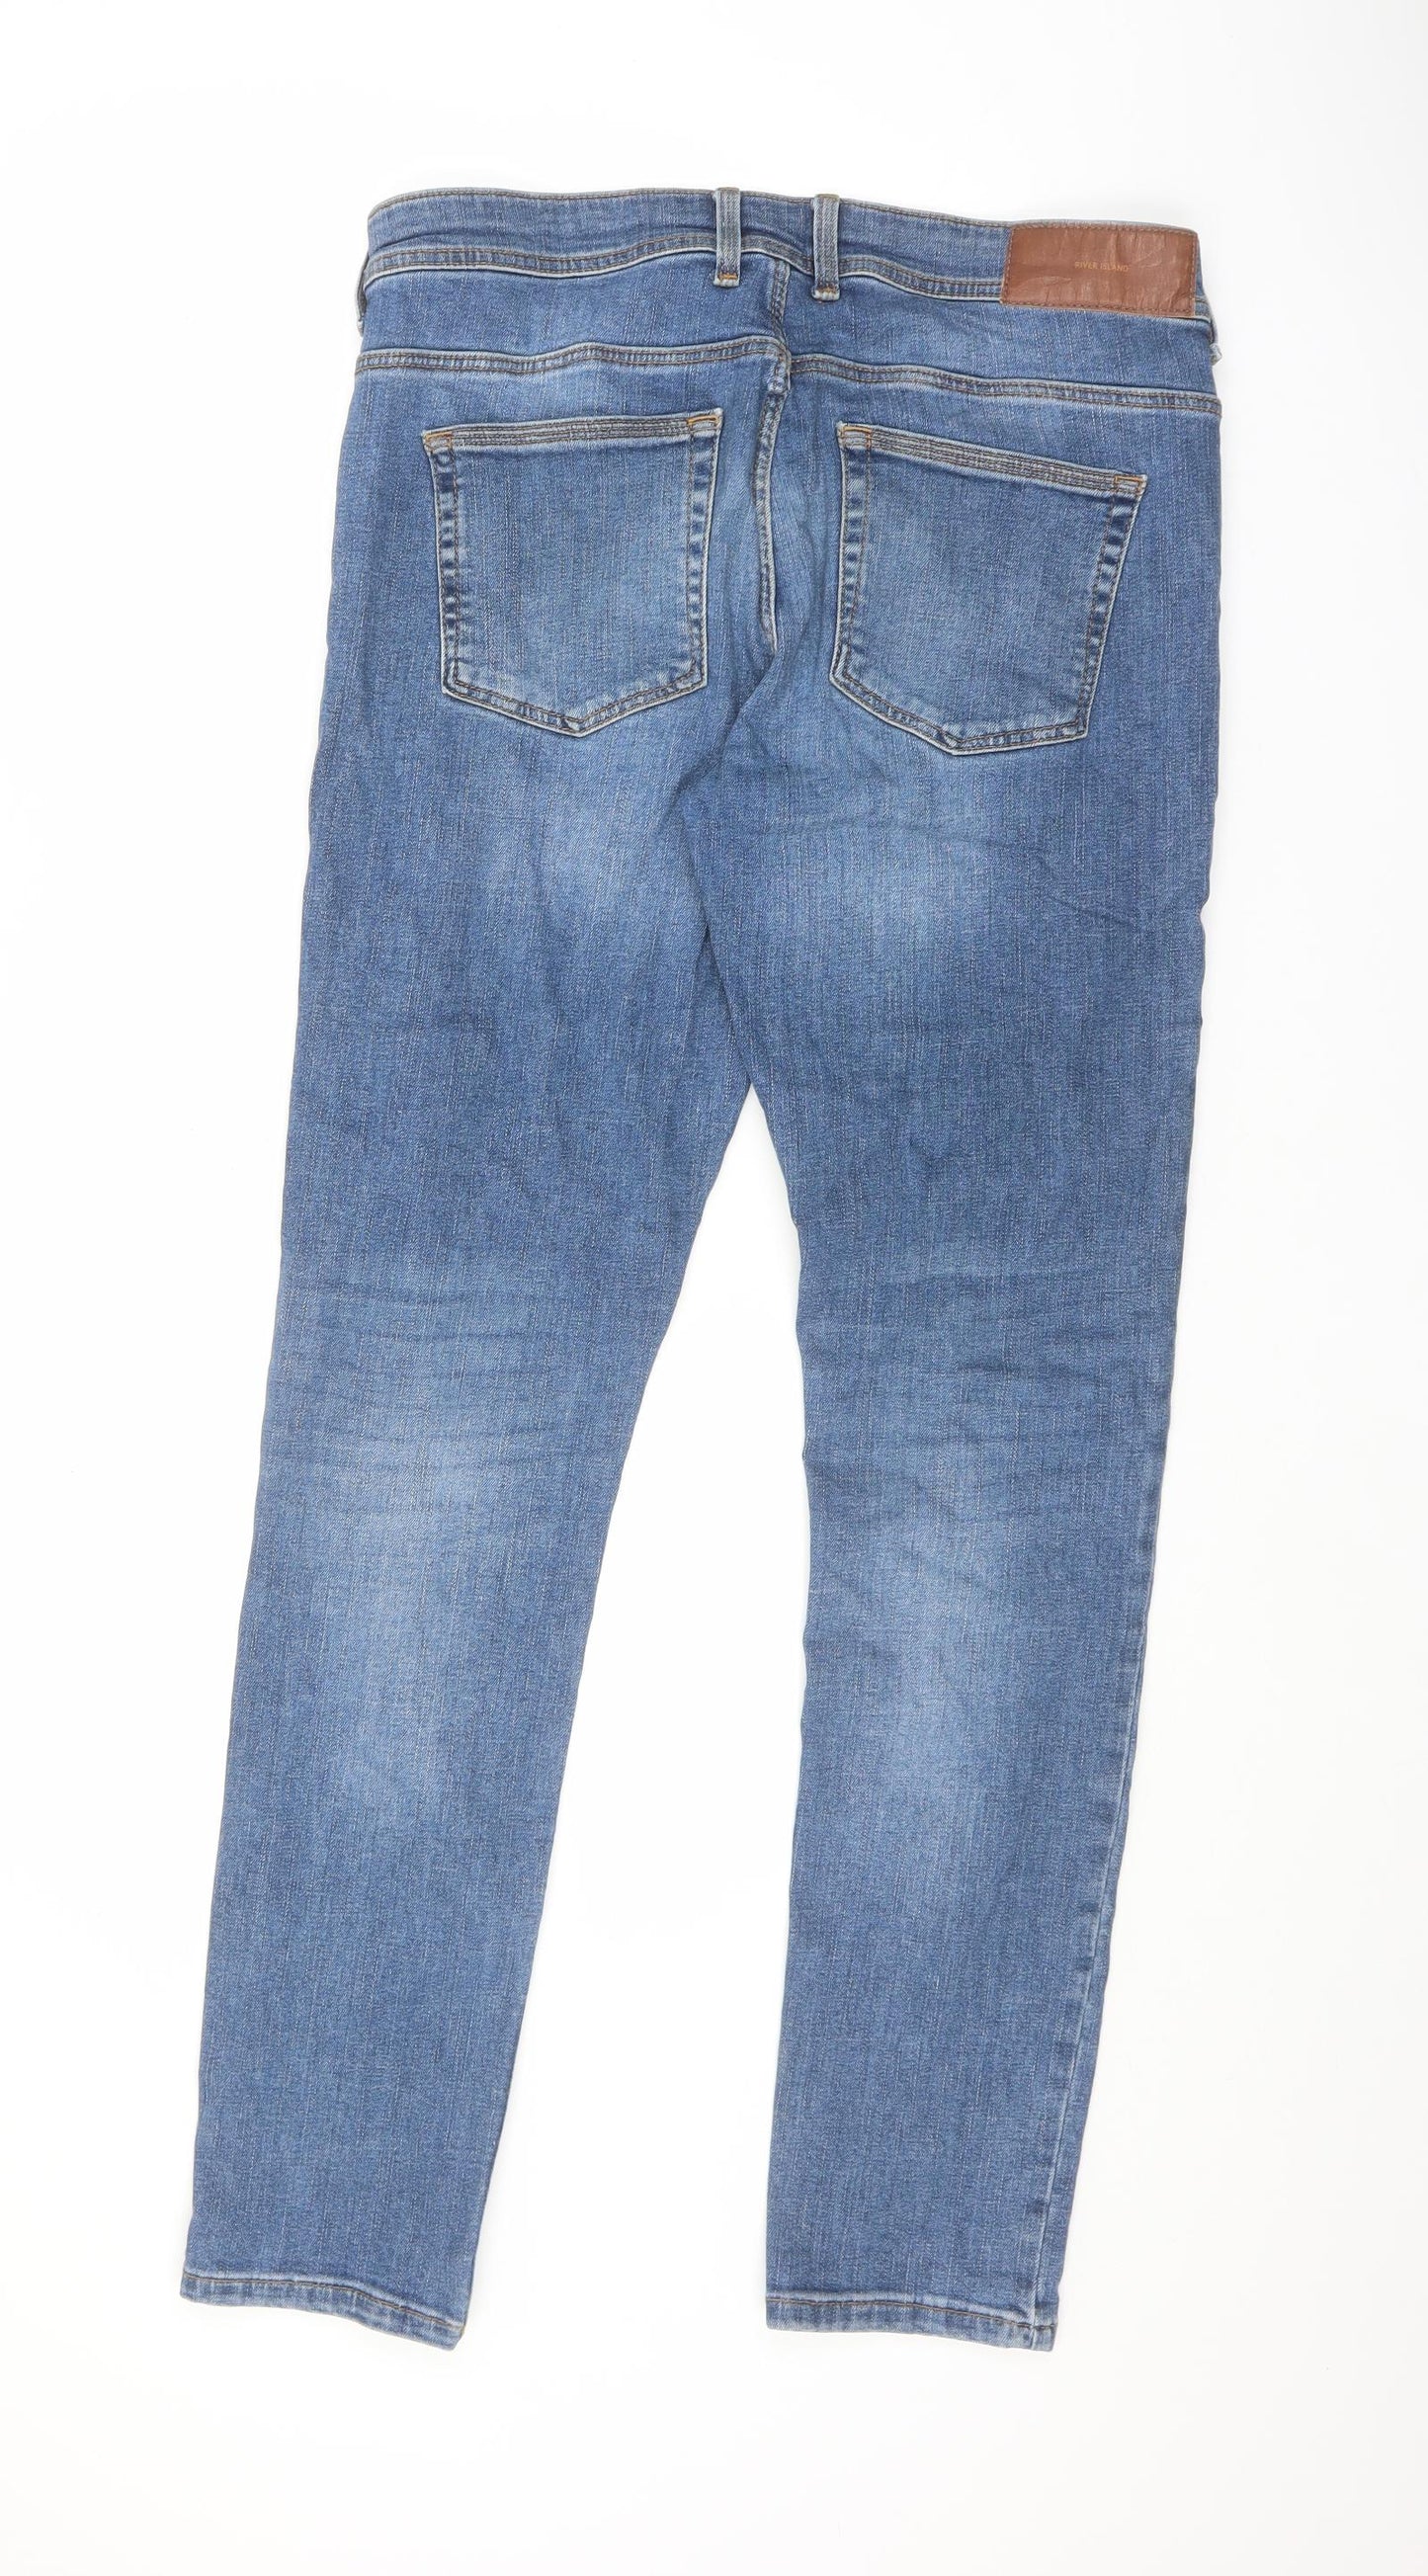 River Island Mens Blue Cotton Skinny Jeans Size 32 in L34 in Regular Zip